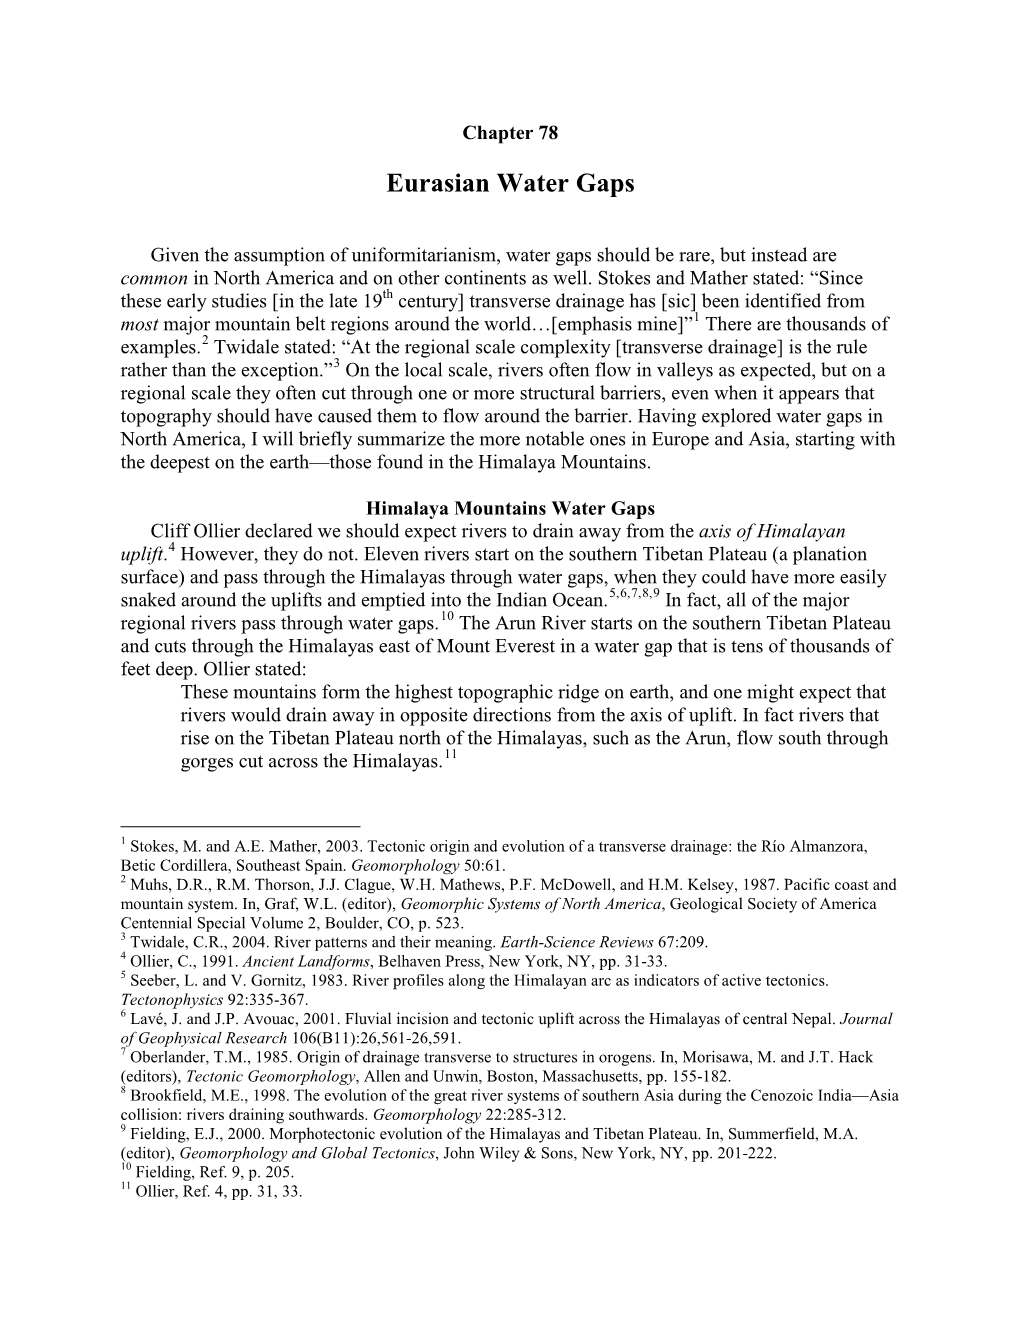 Chapter 78. Eurasian Water Gaps